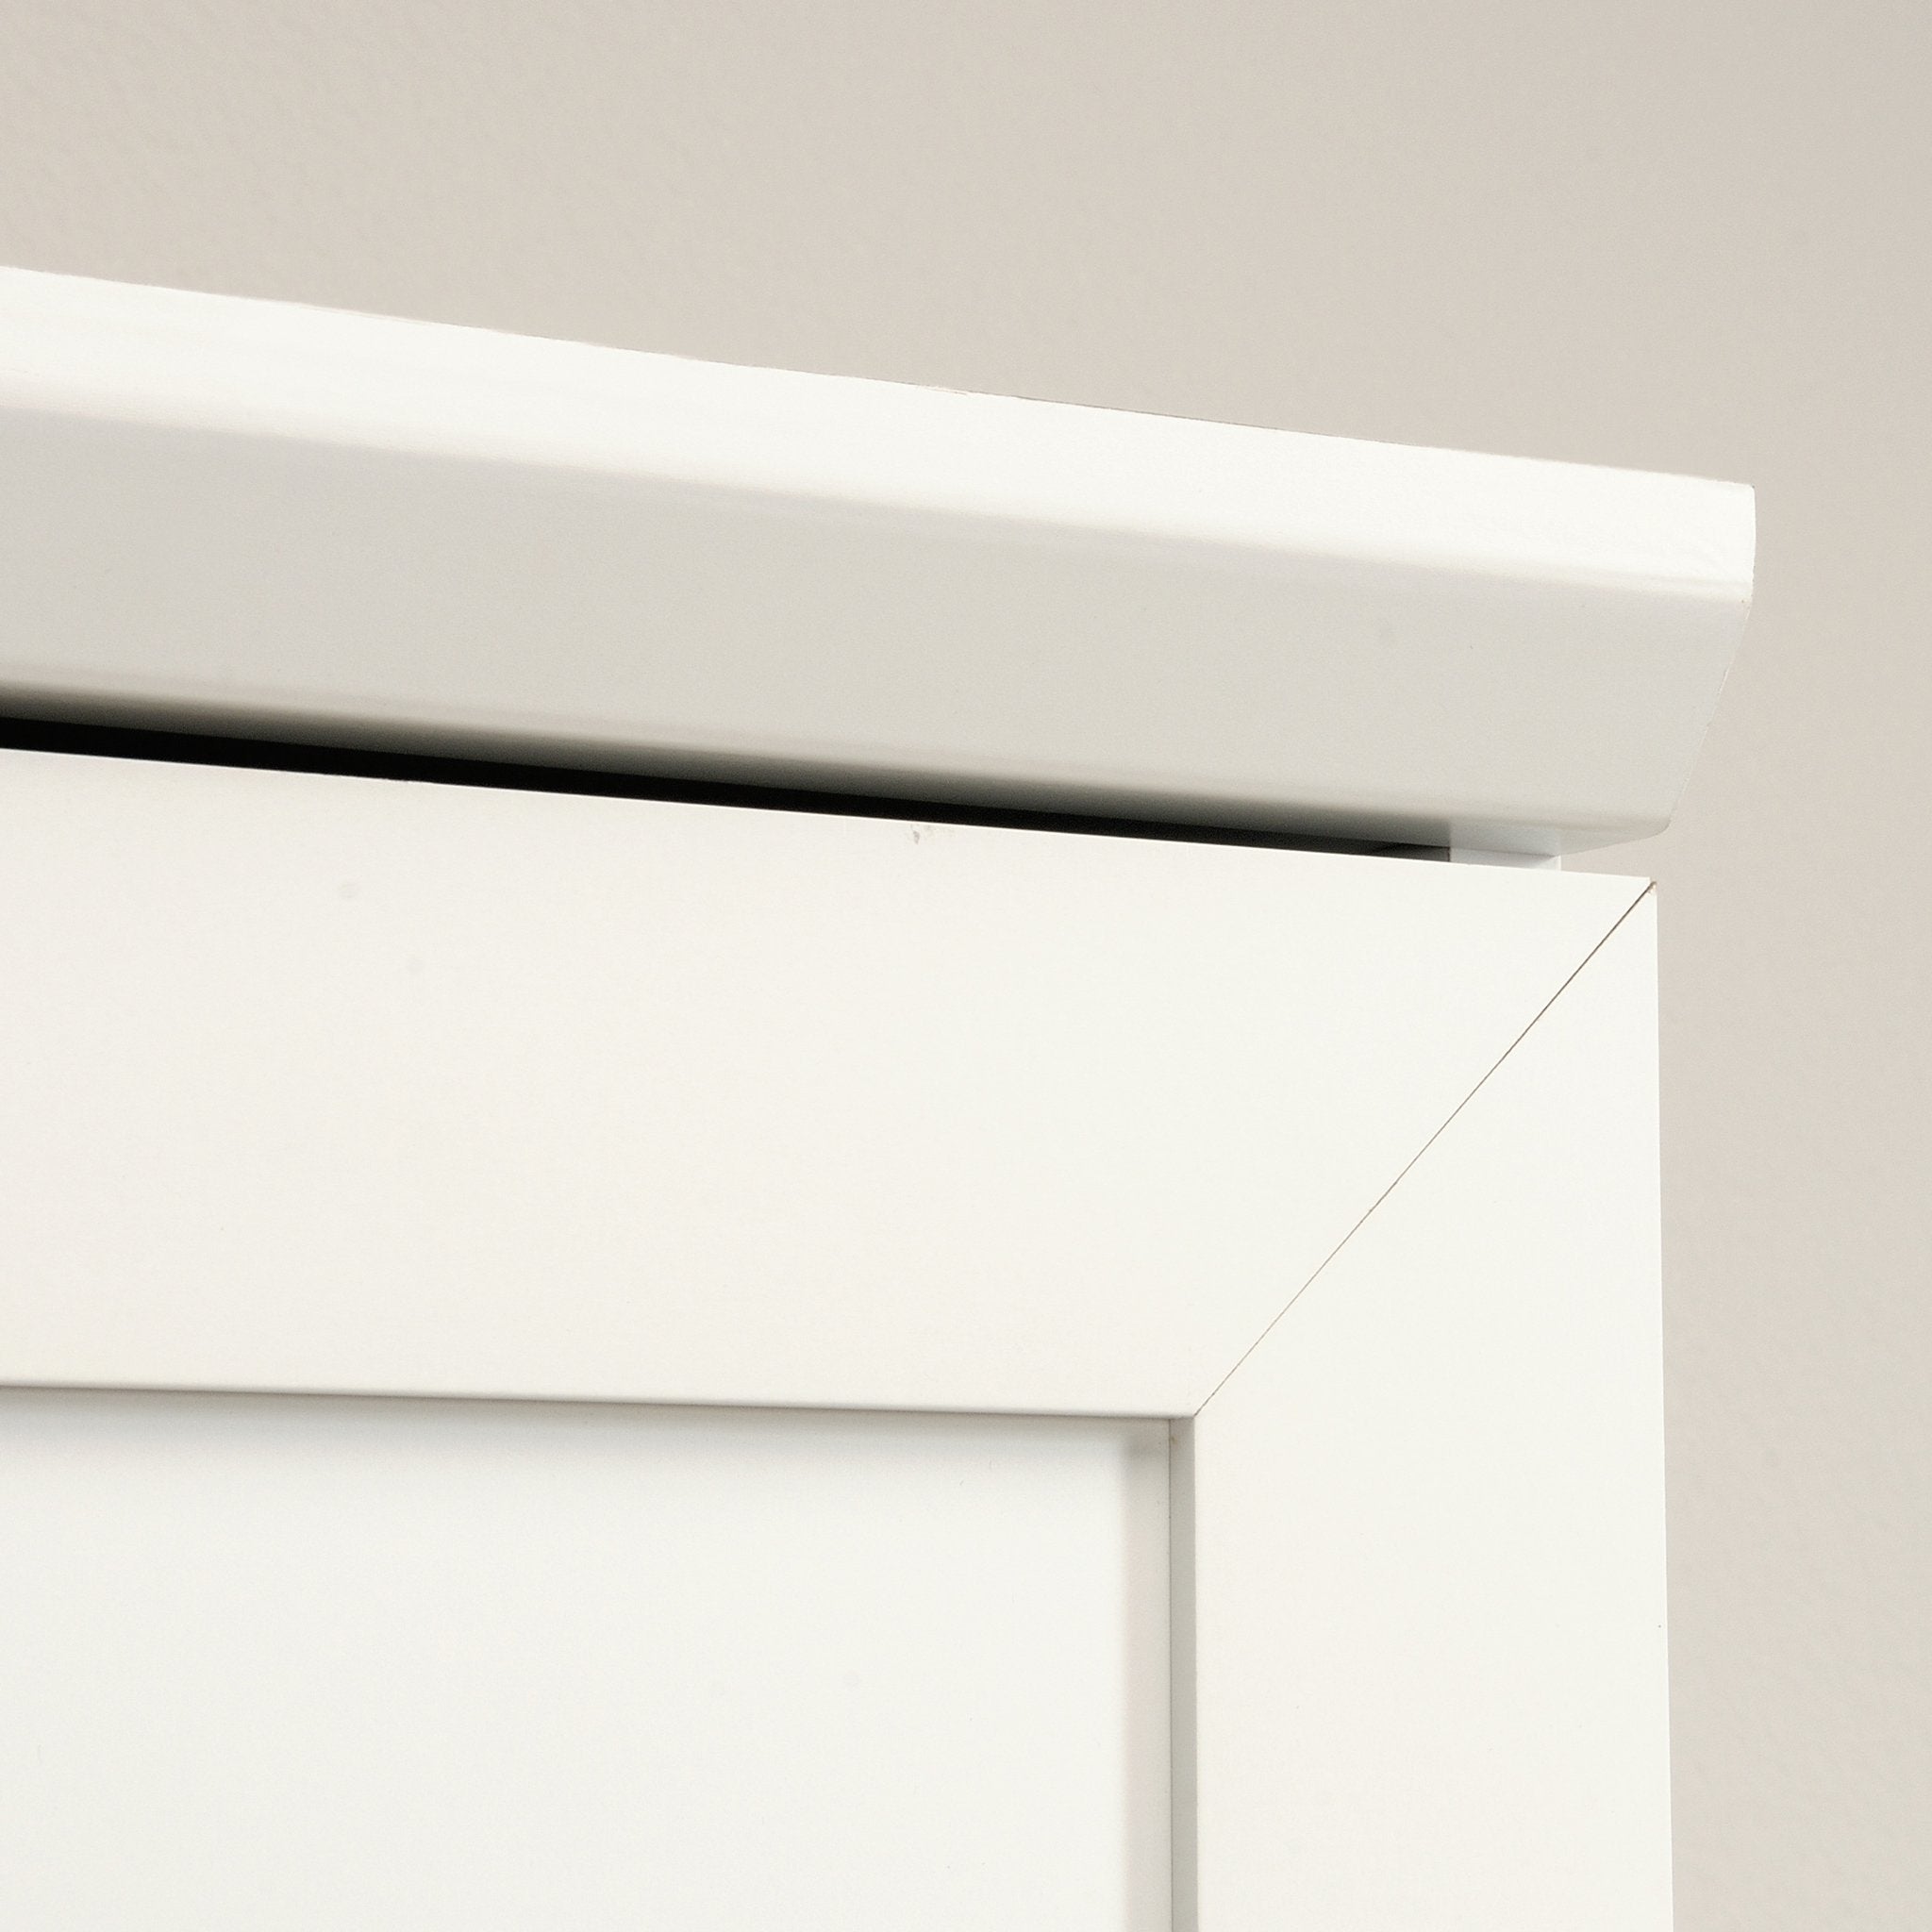 Sauder HomePlus Storage Pantry cabinets, L: 23.31